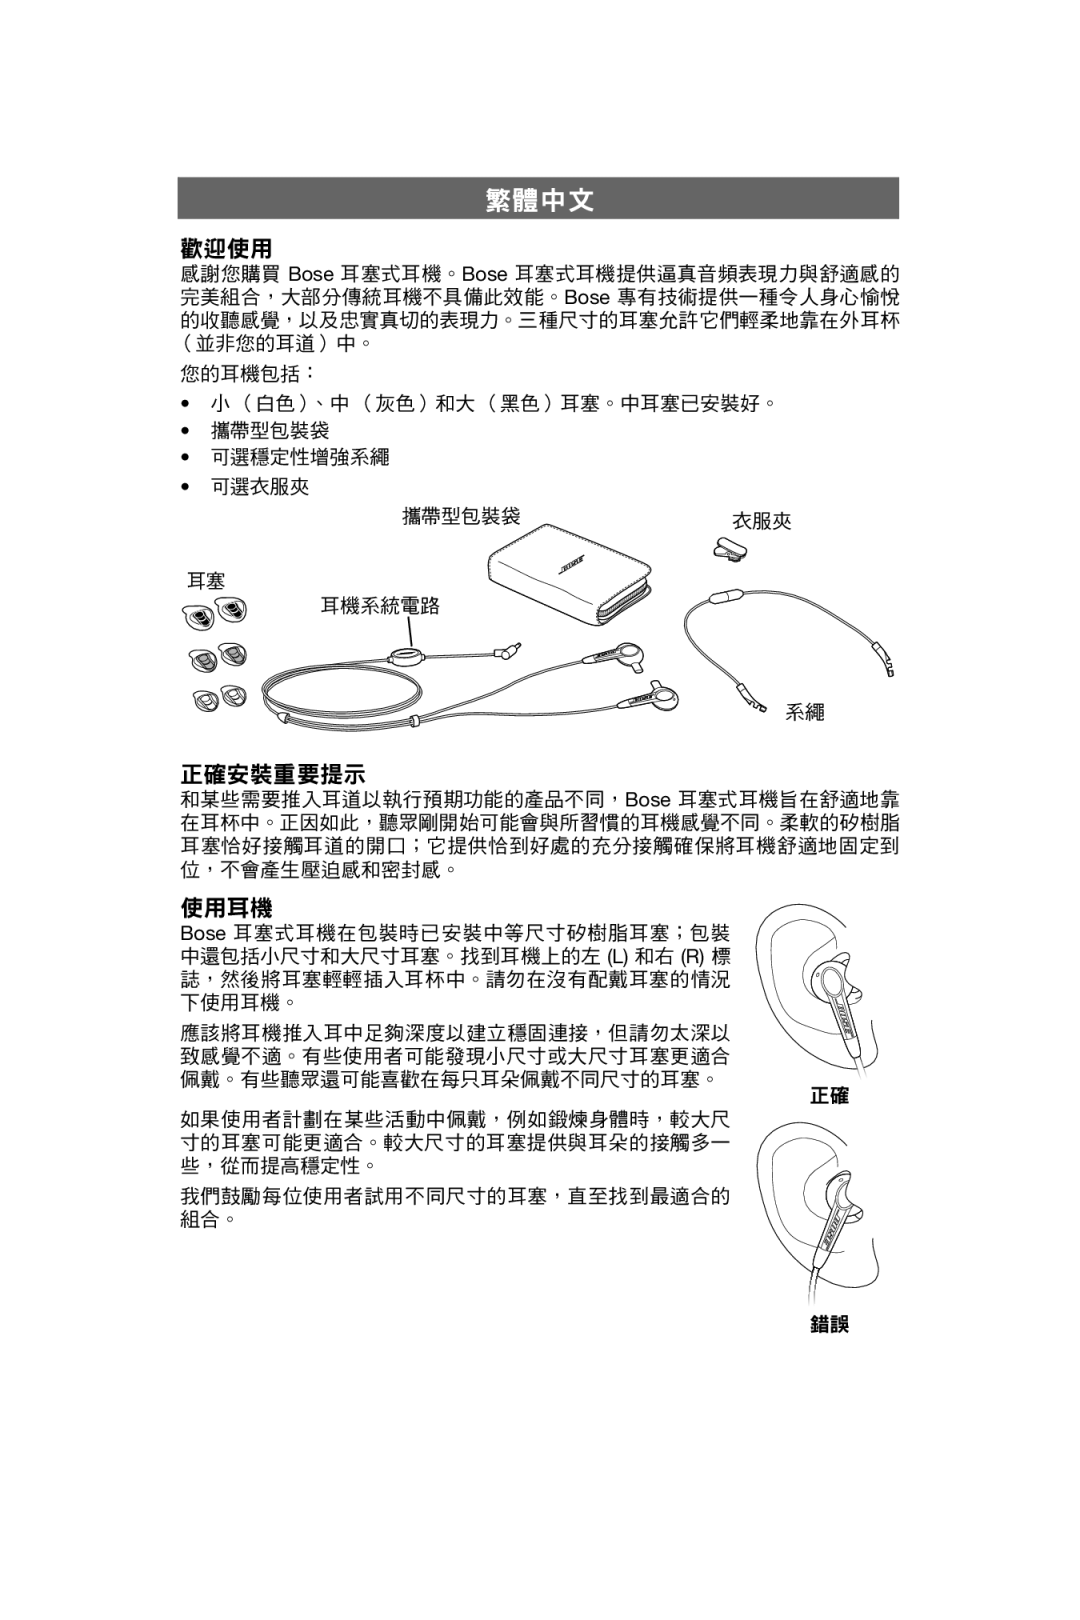 Bose In-Ear Headphones manual 繁體中文, 歡迎使用, 正確安裝重要提示, 使用耳機 